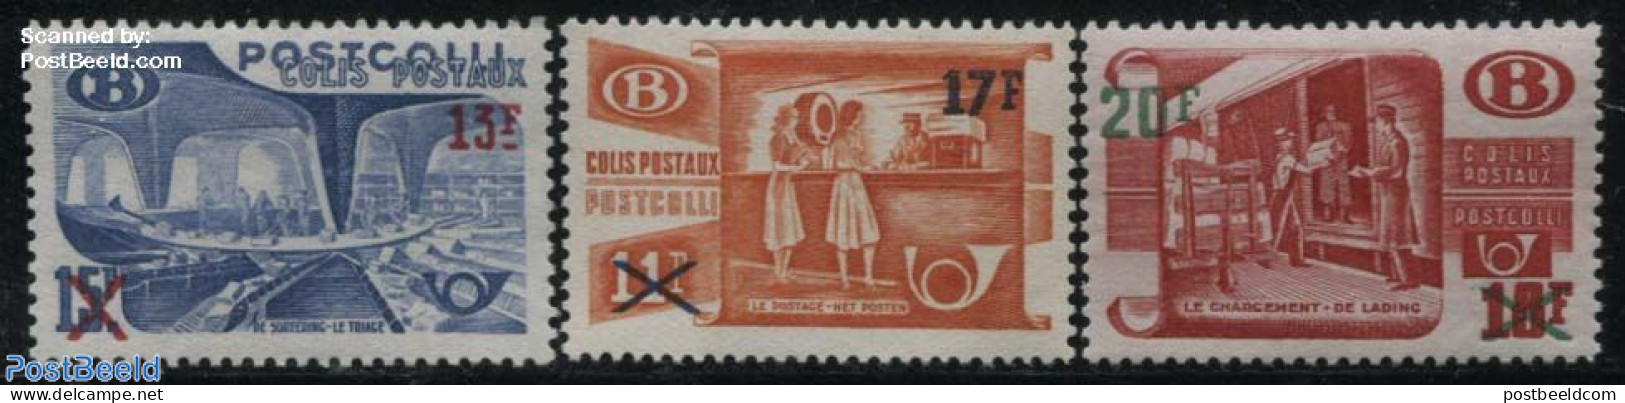 Belgium 1953 Parcel Stamps 3v, Unused (hinged), Transport - Railways - Nuovi